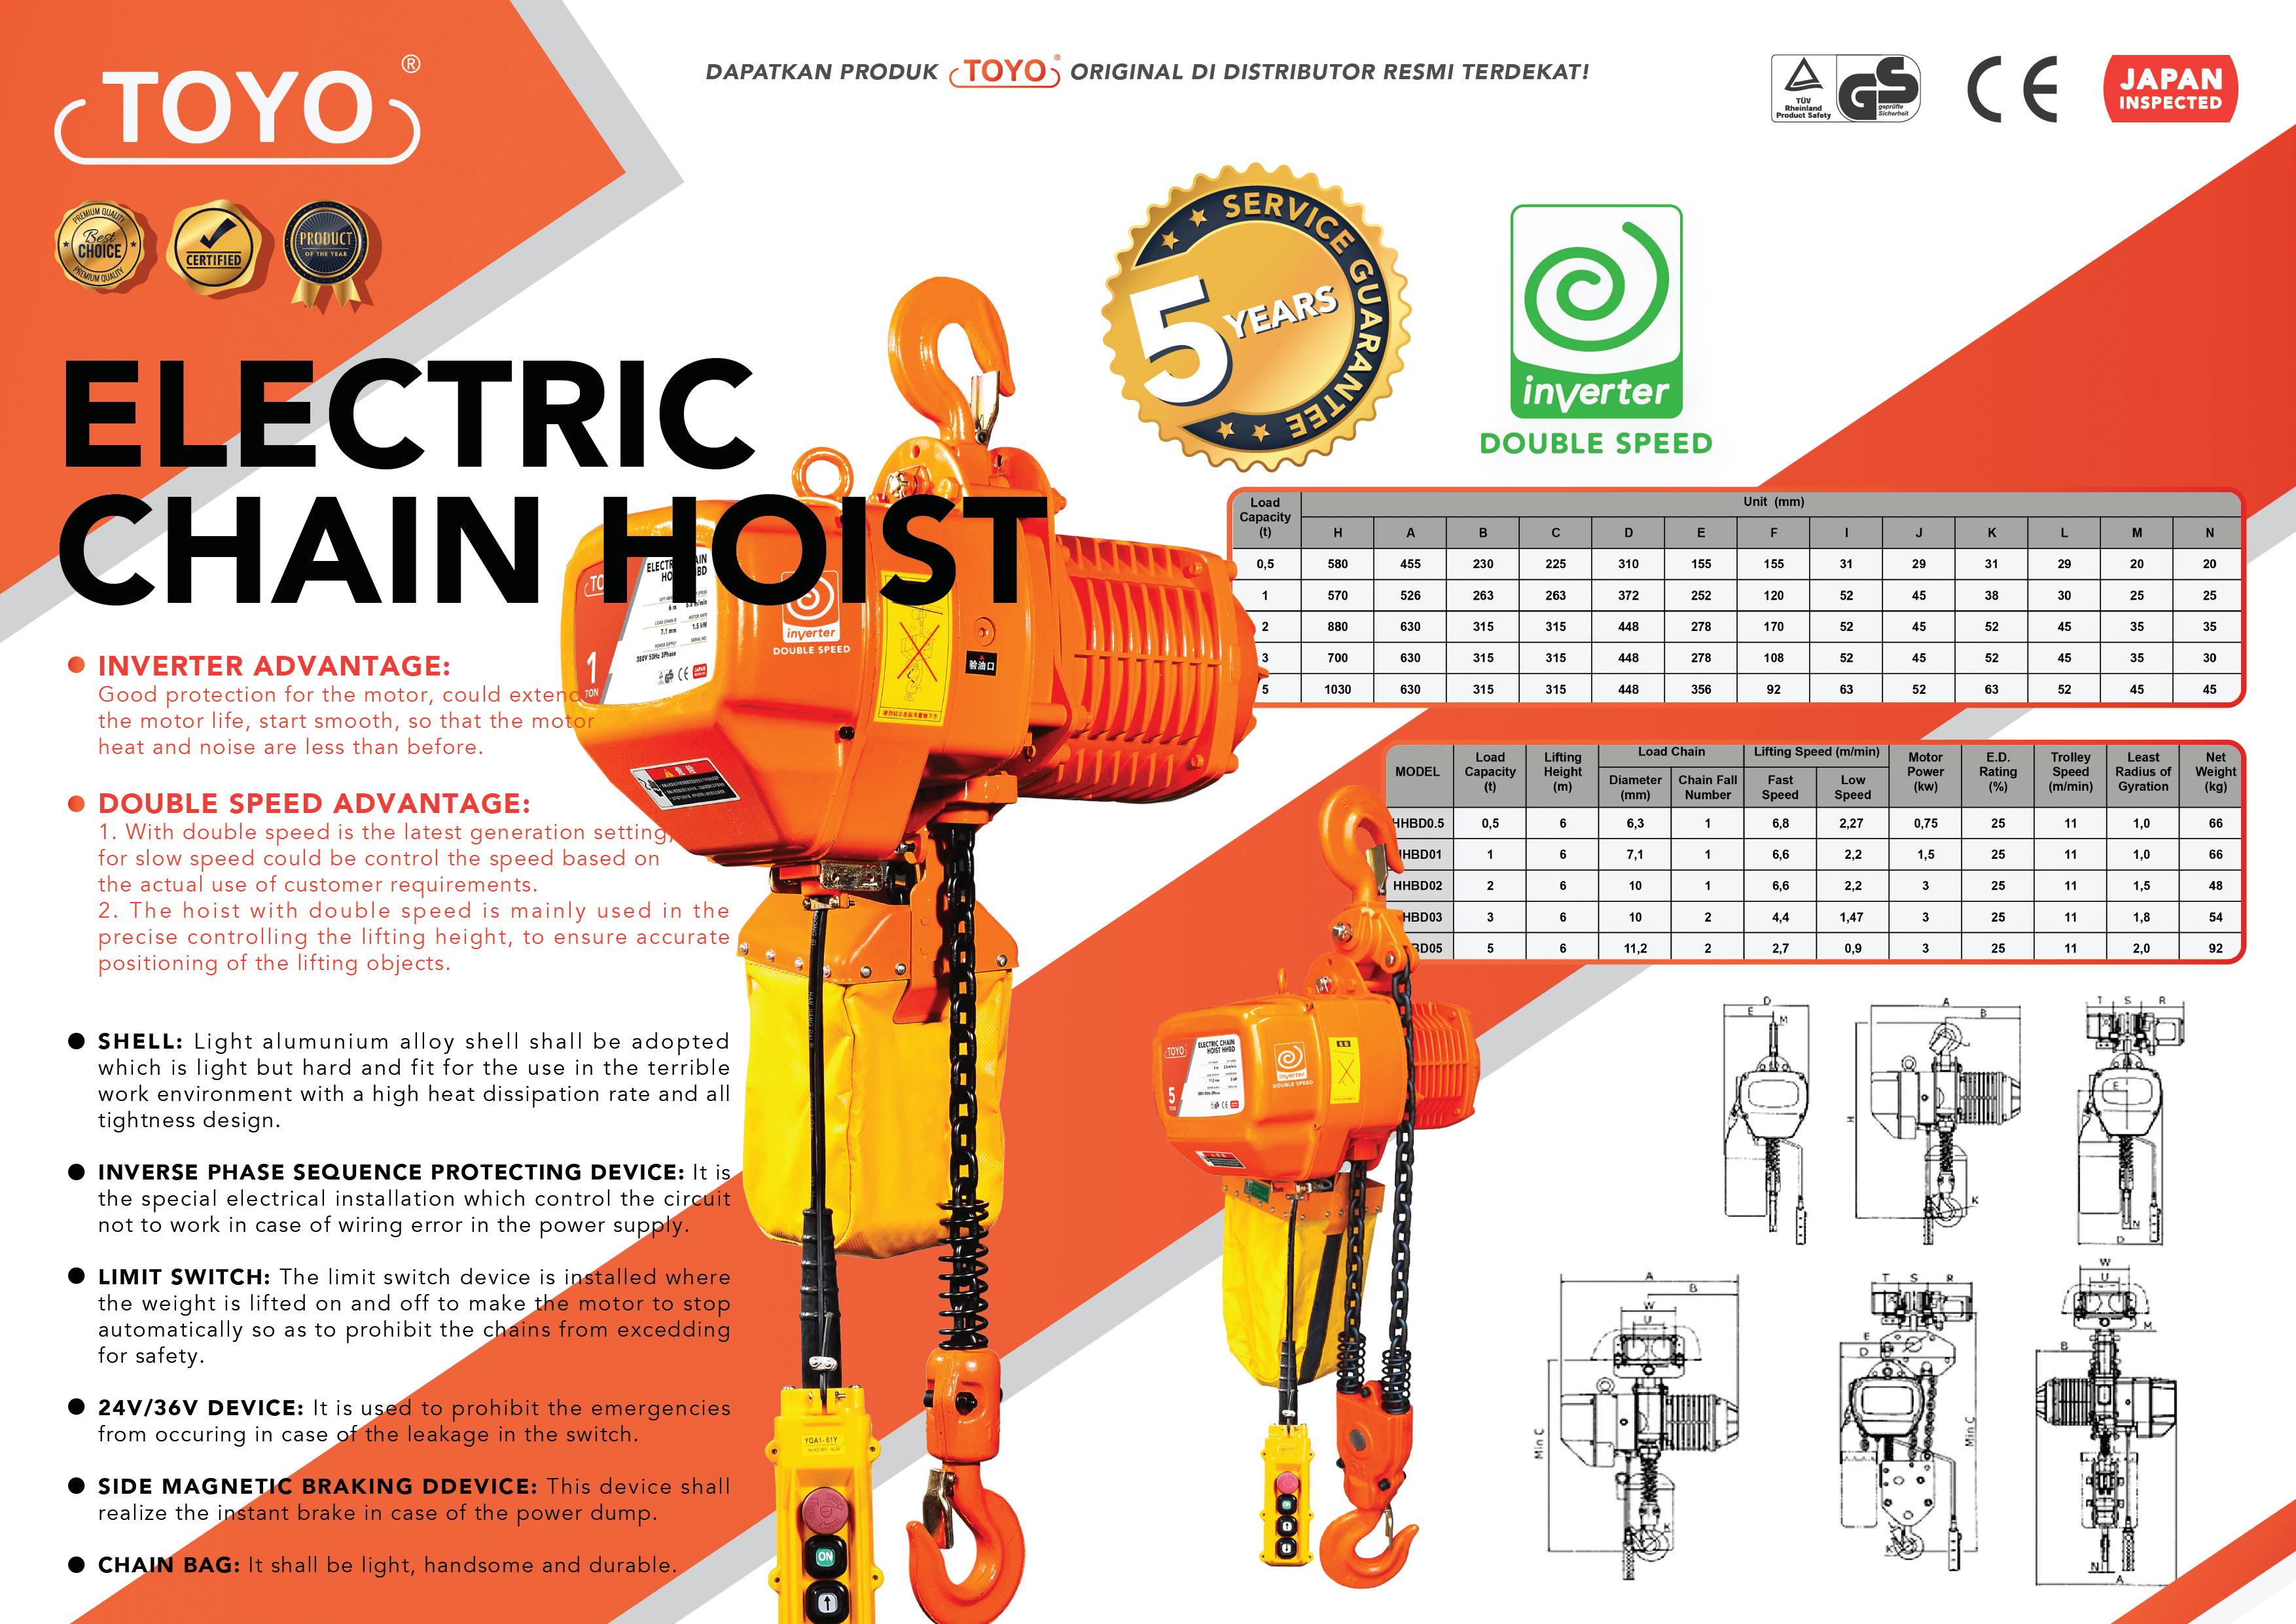 Spesifikasi Detail Inverter Electric Chain Hoist HHBD Type Toyo Original